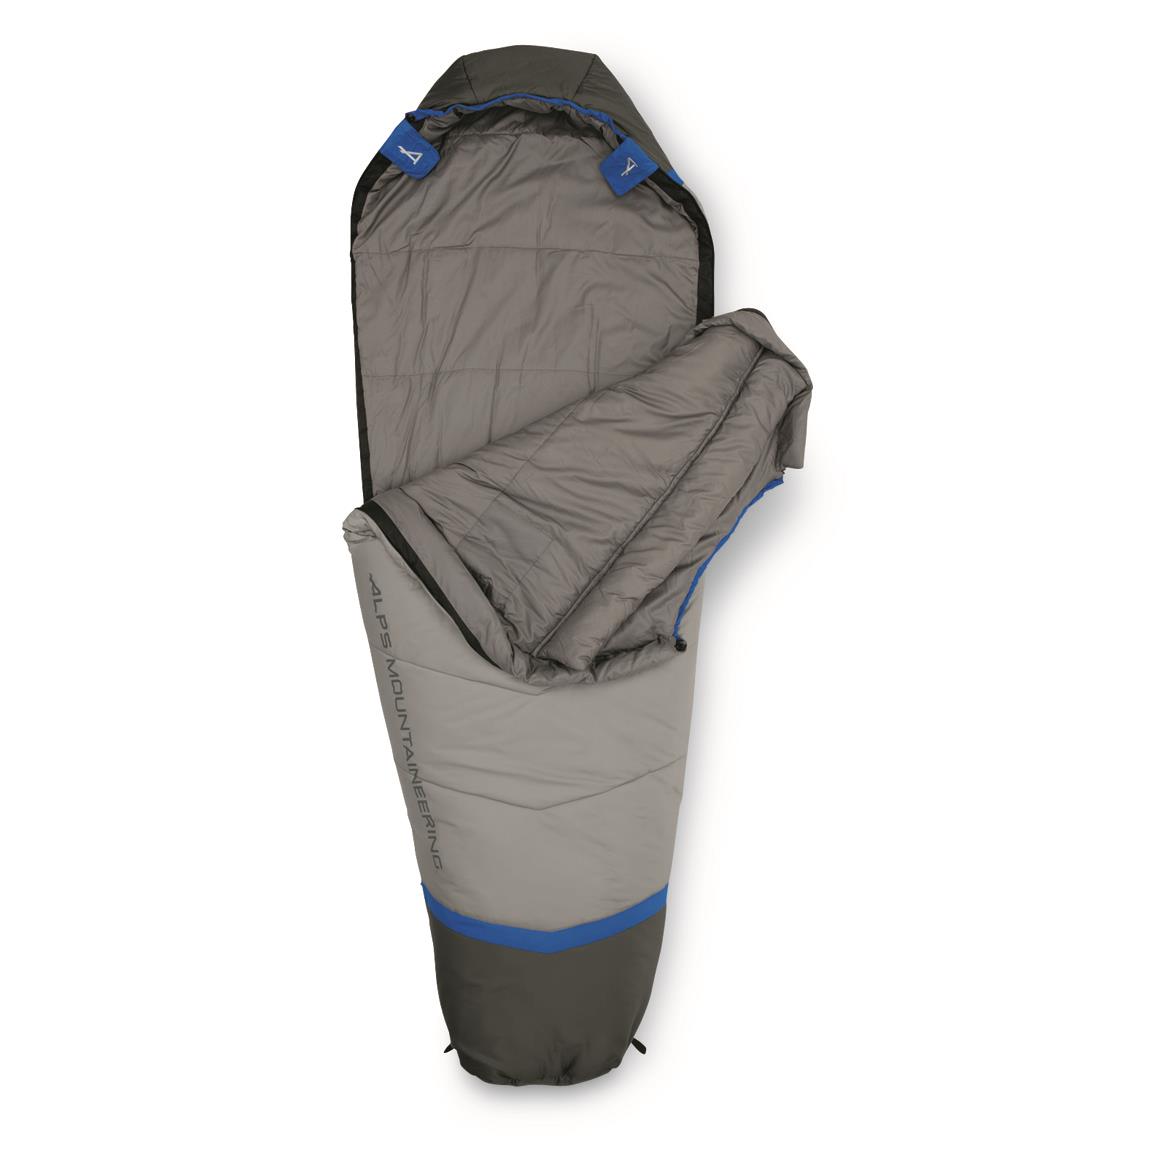 ALPS Mountaineering Aura Long Sleeping Bag in 20°F or 0°F - 709578 